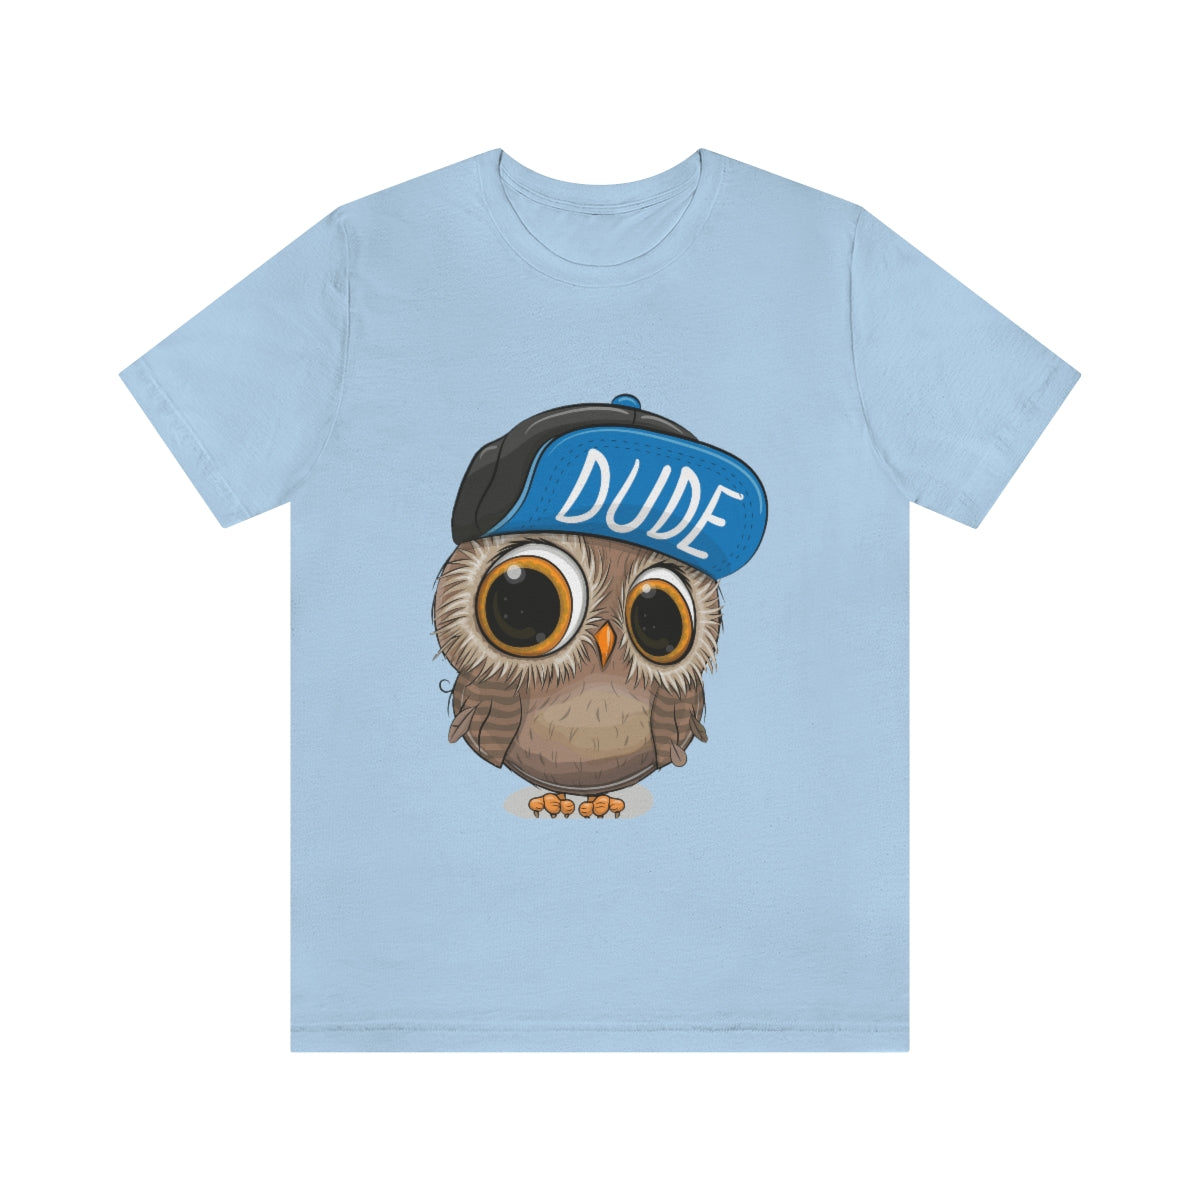 Unisex Jersey Short Sleeve Tee "Cute Cartoon Owl in a cap"